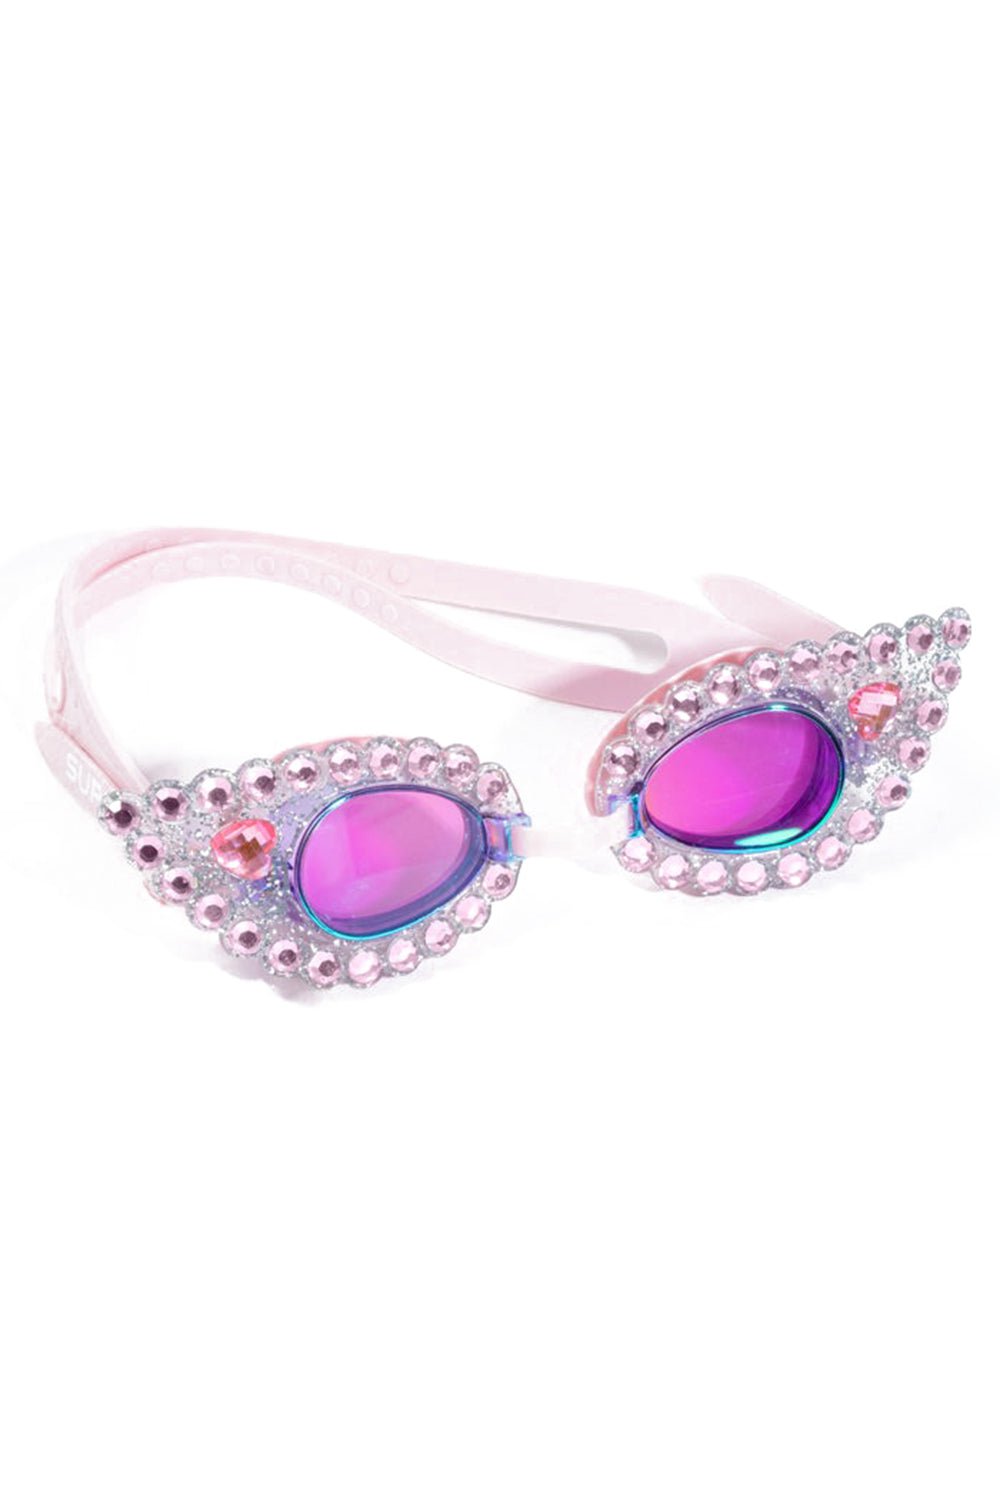 SUPER SMALLS-Pink Splash Goggles-PINK